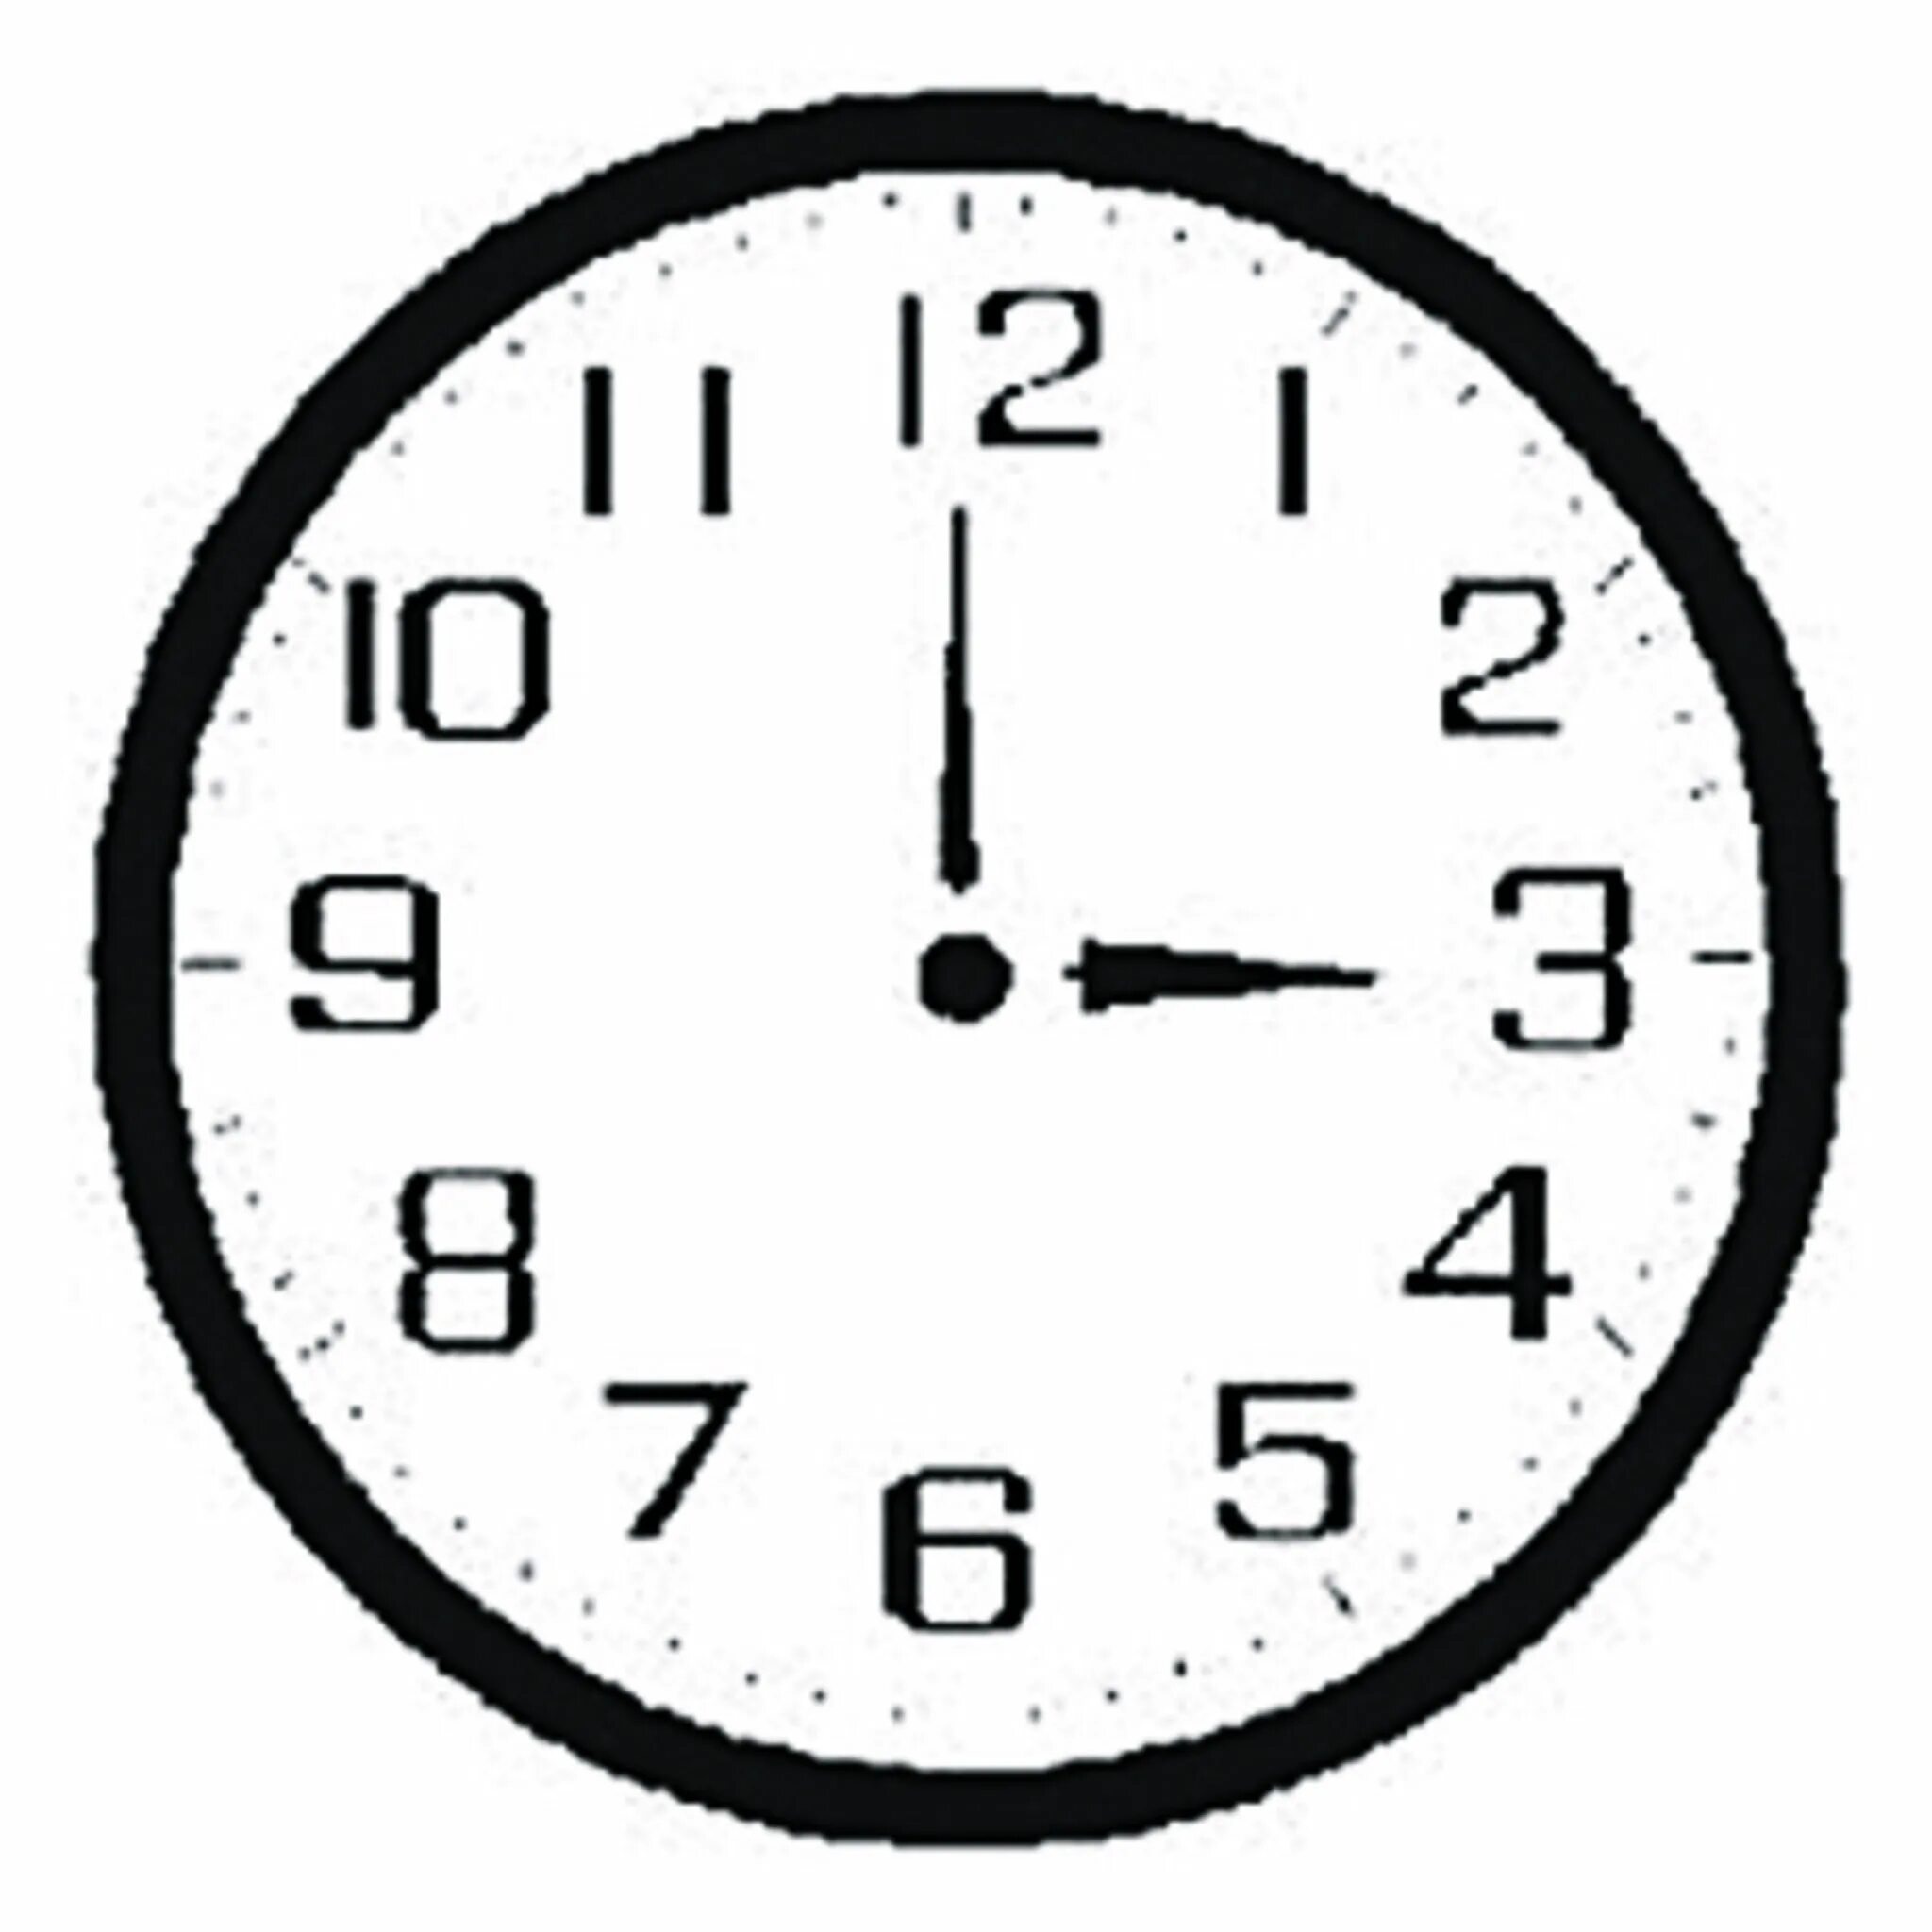 Три часа на циферблате. Часы со стрелками. Изображение часов со стрелками. Часы три часа.